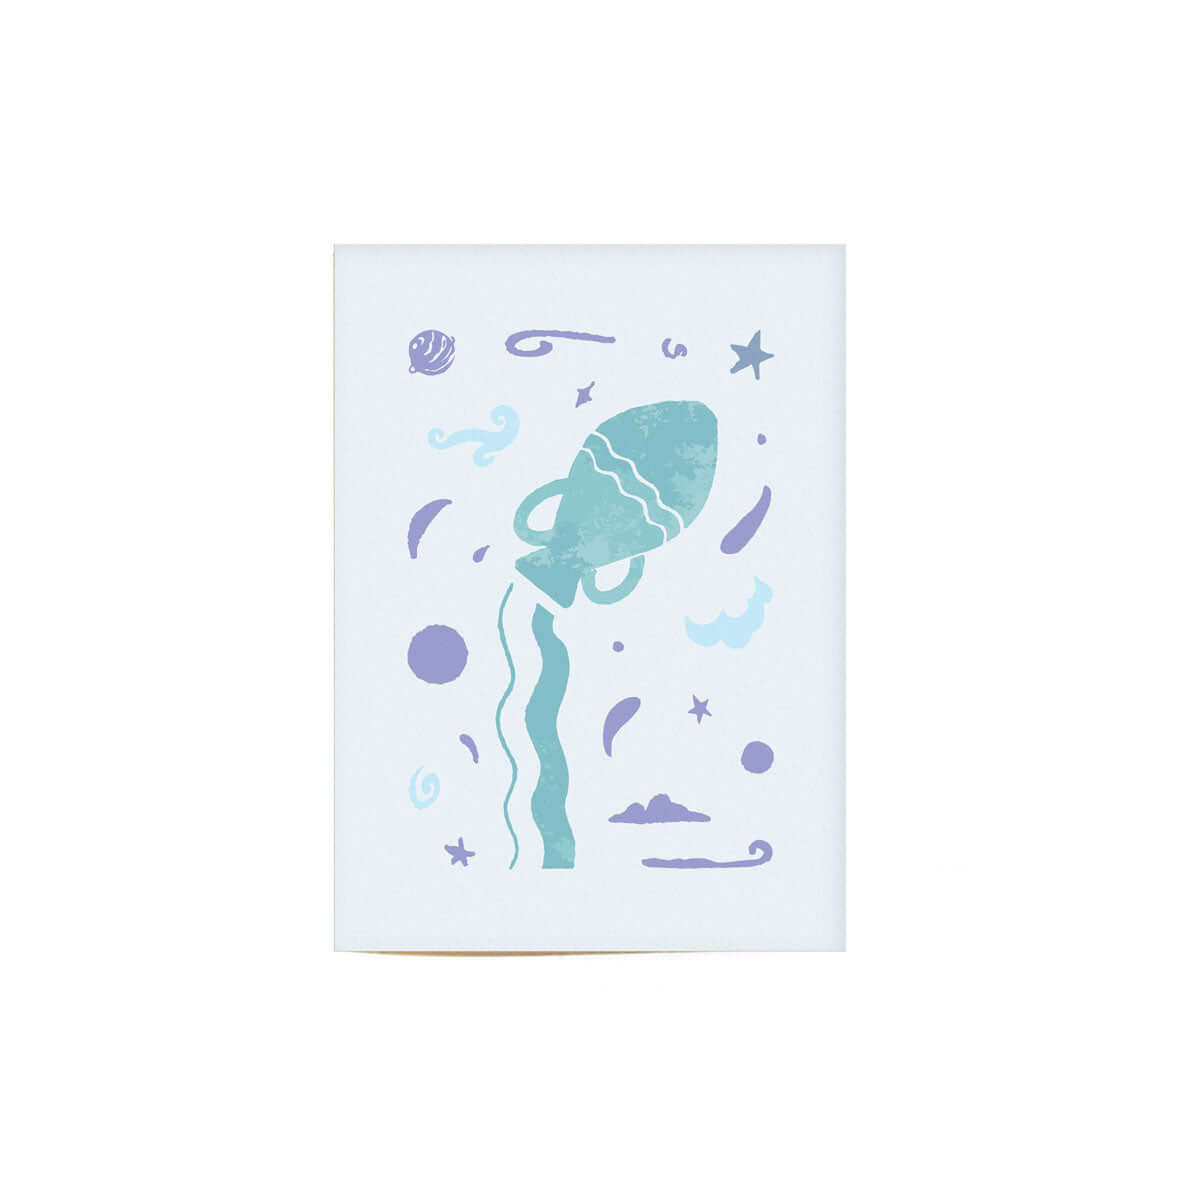 purple and blue card with aquarius vase illustration